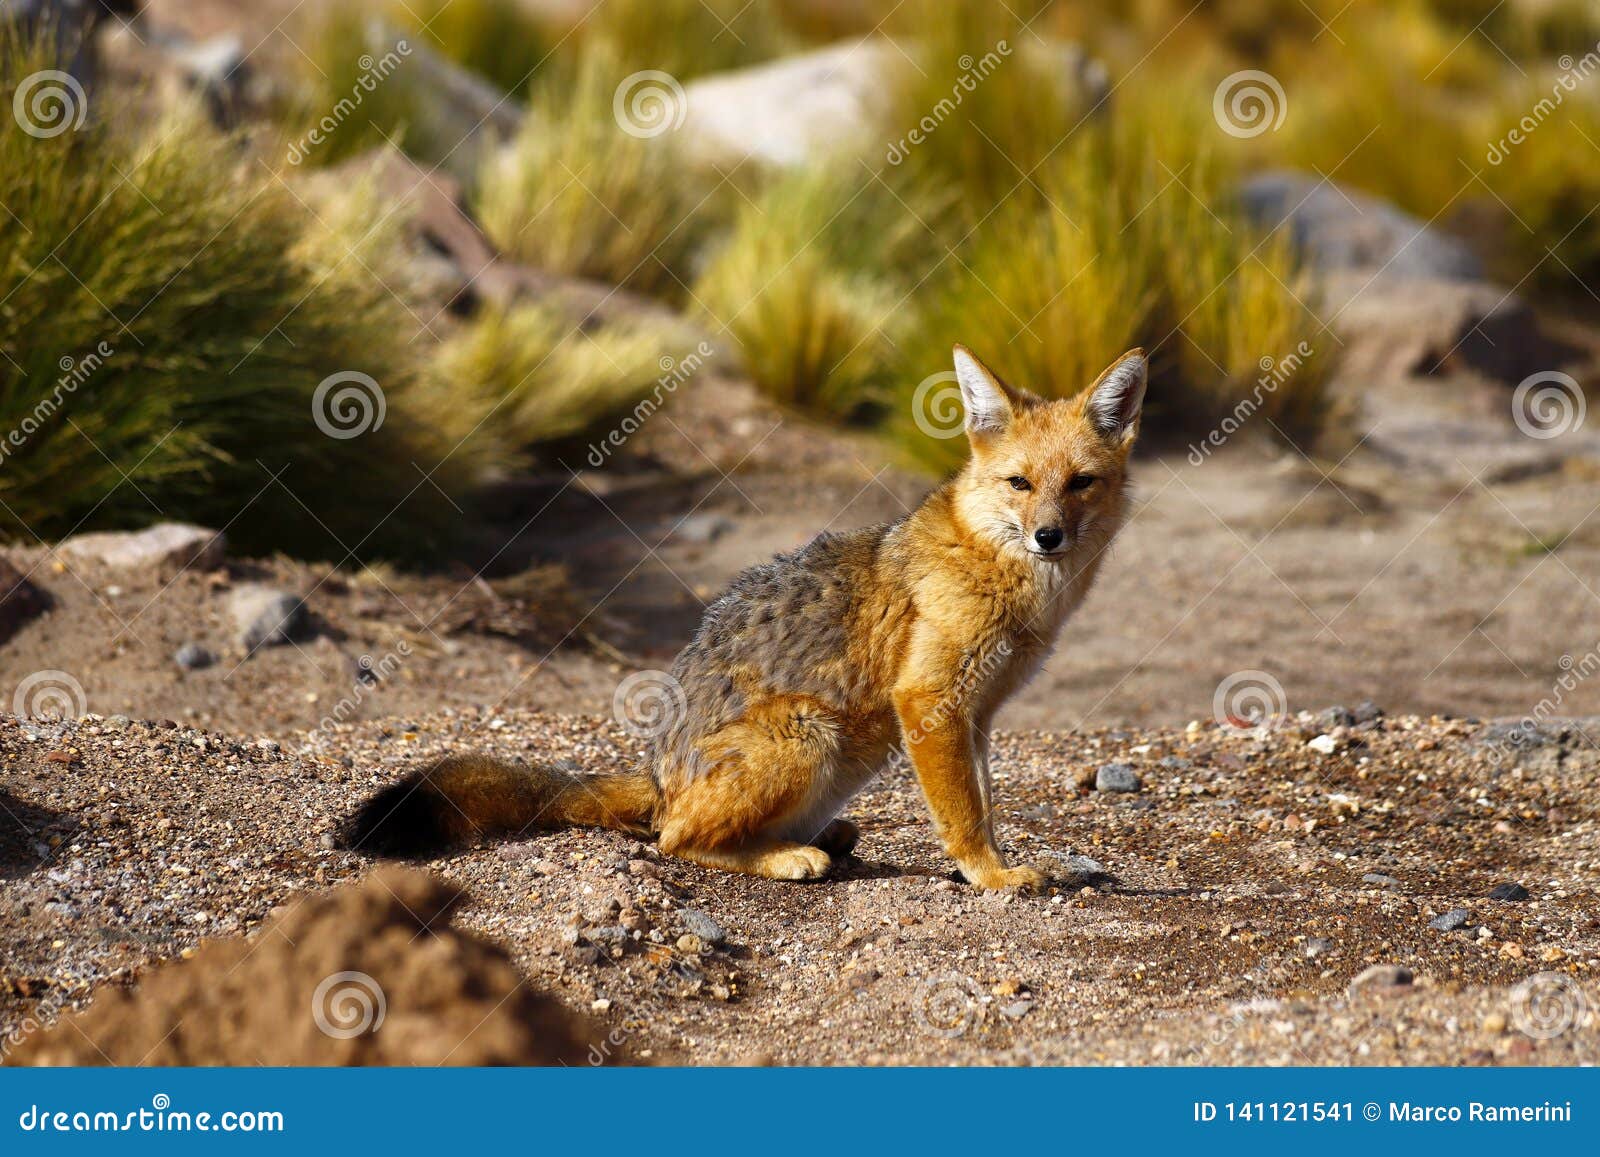 South American Fox, Atacama Desert, Chile Stock Image - Image of northern,  chile: 141121541